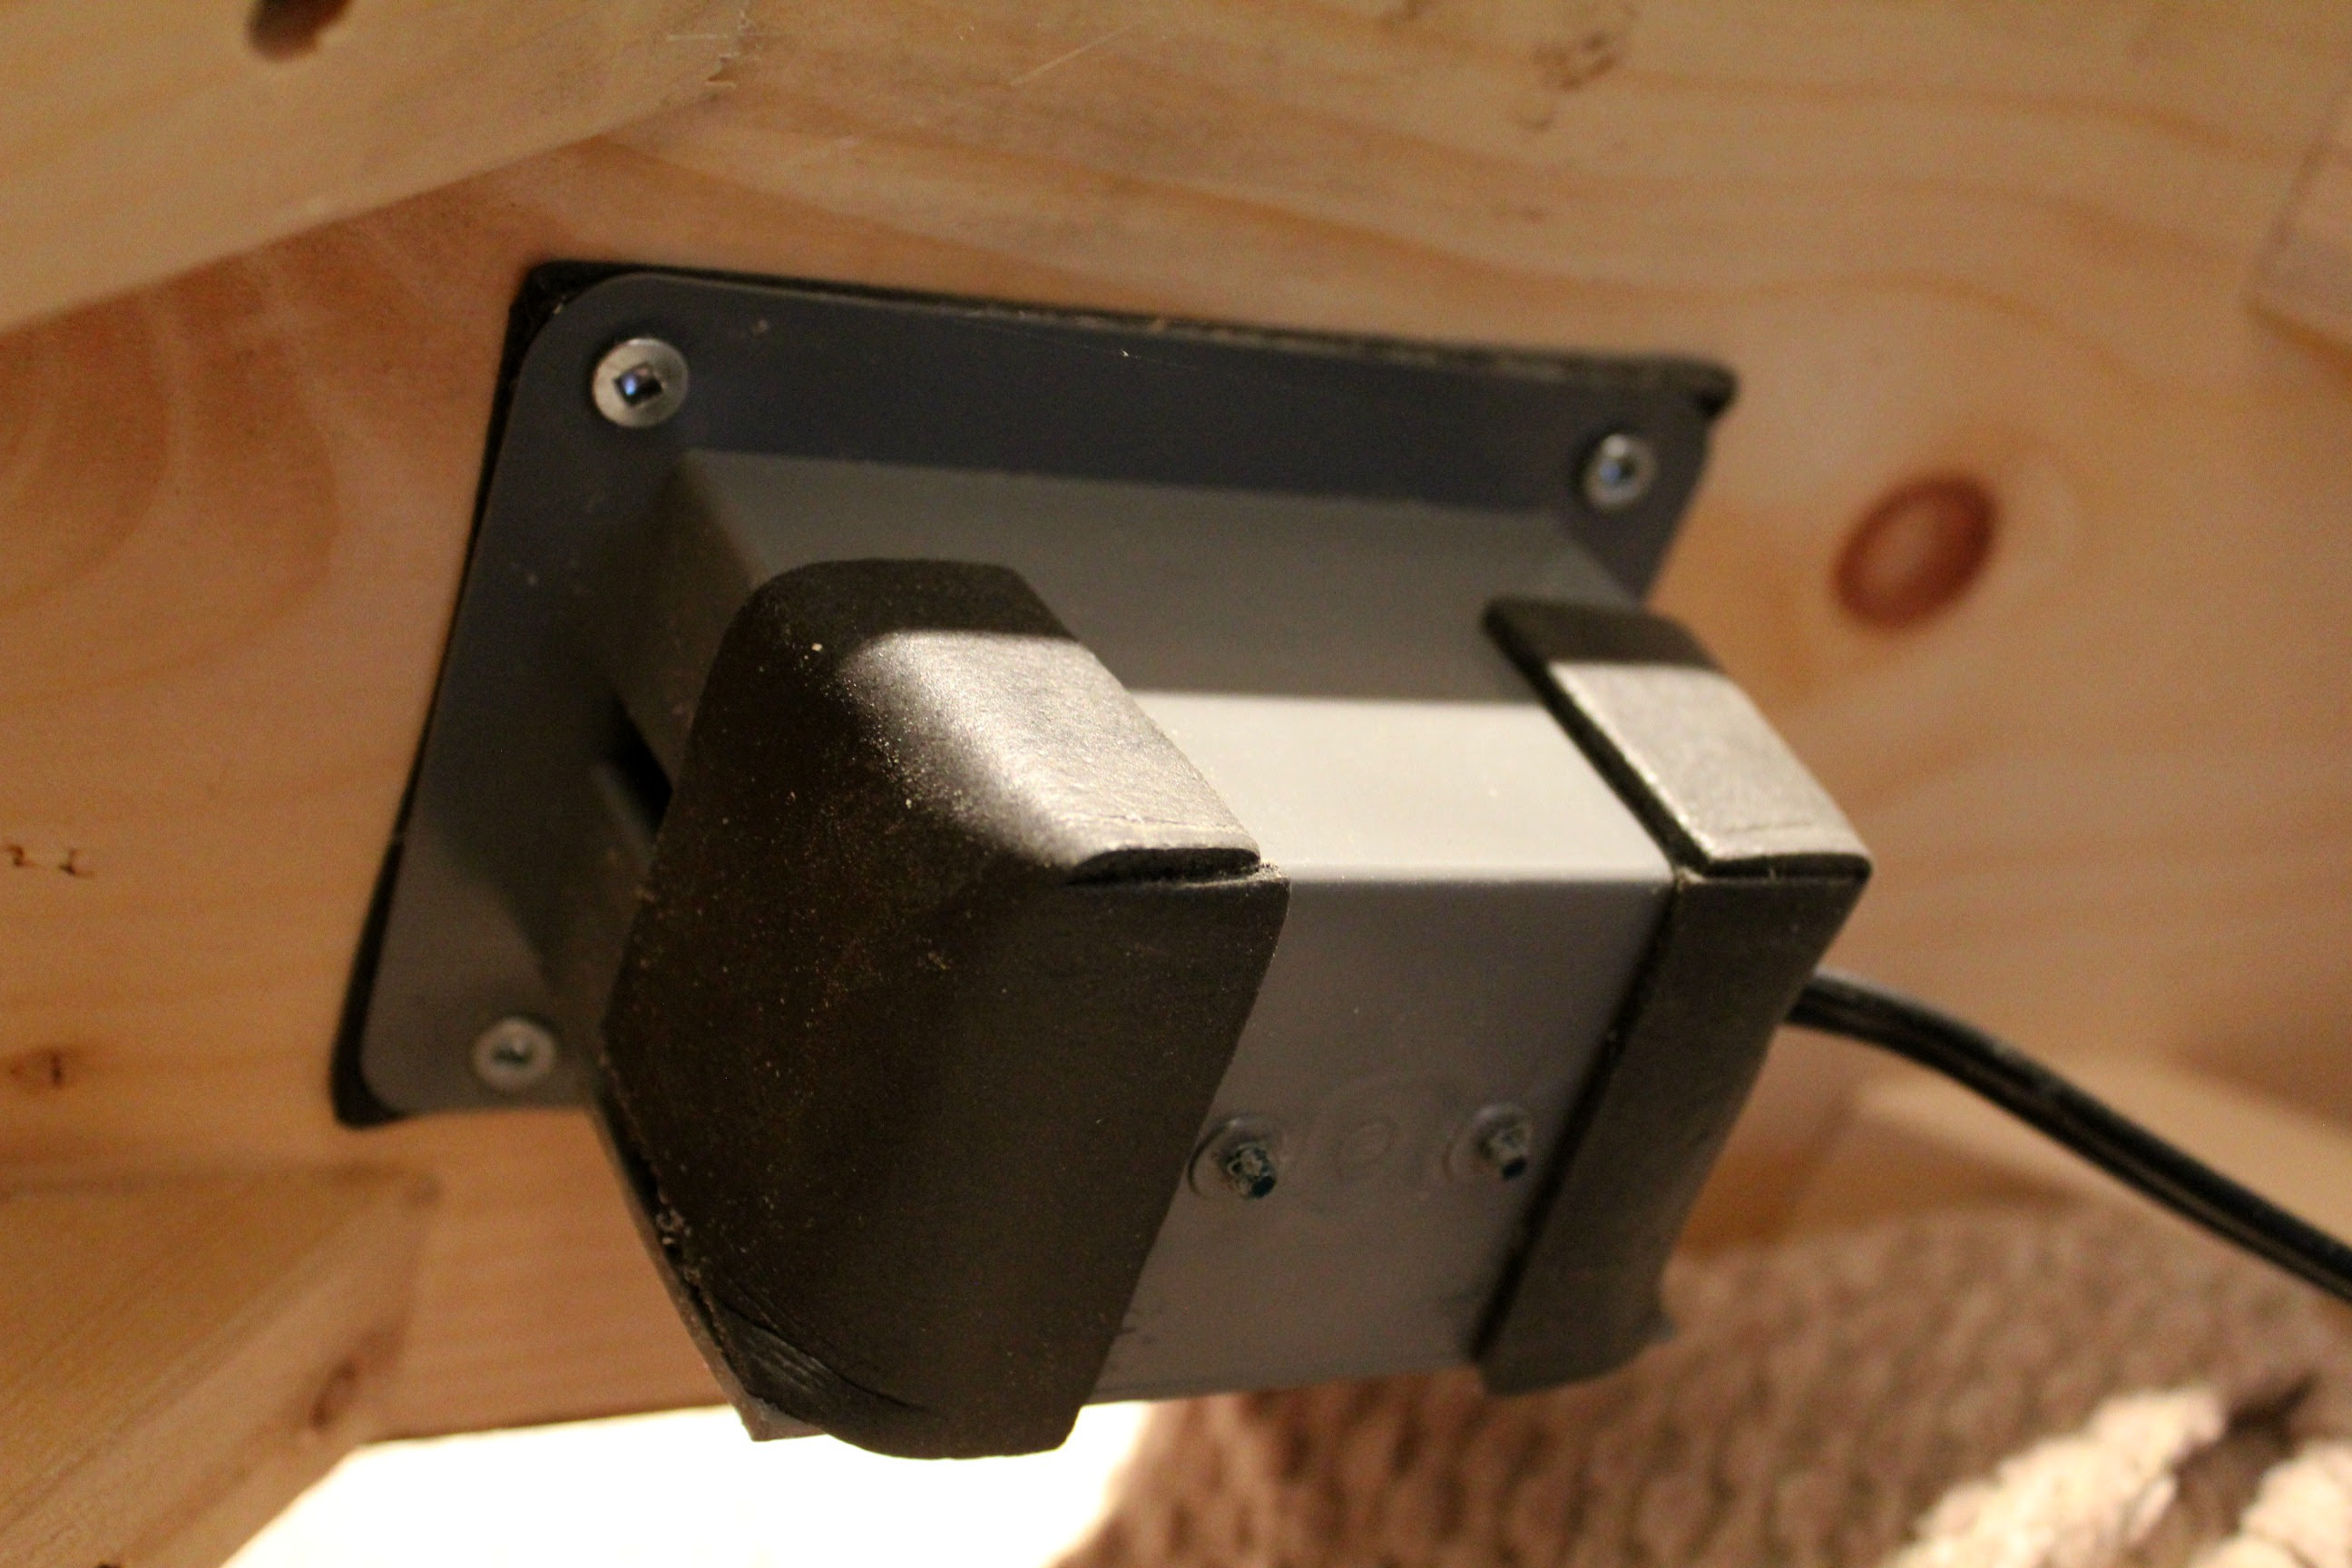 DIY built-in extension outlet